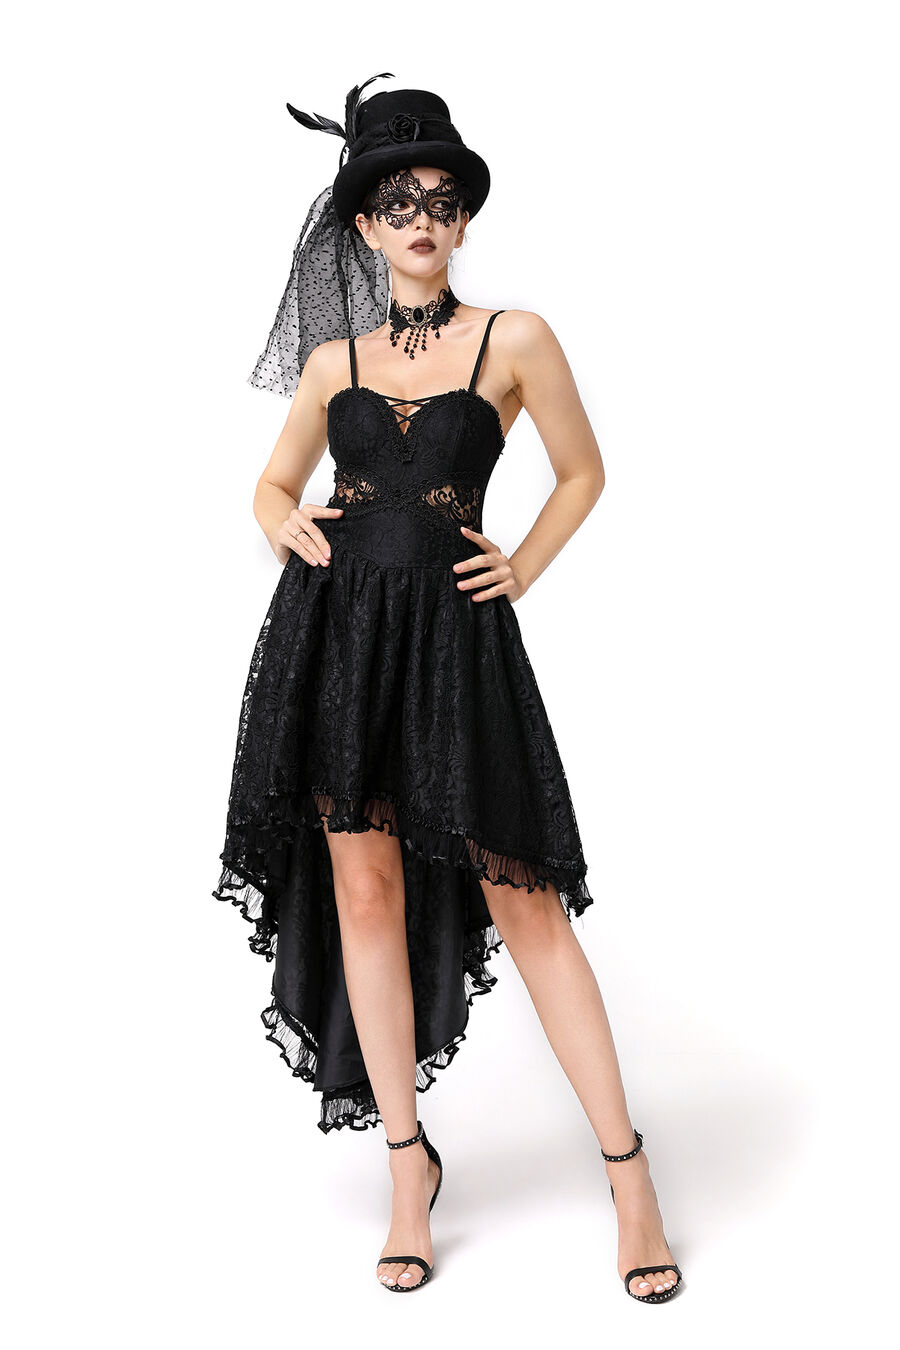 photo n°4 : robes dentelle femme gothique